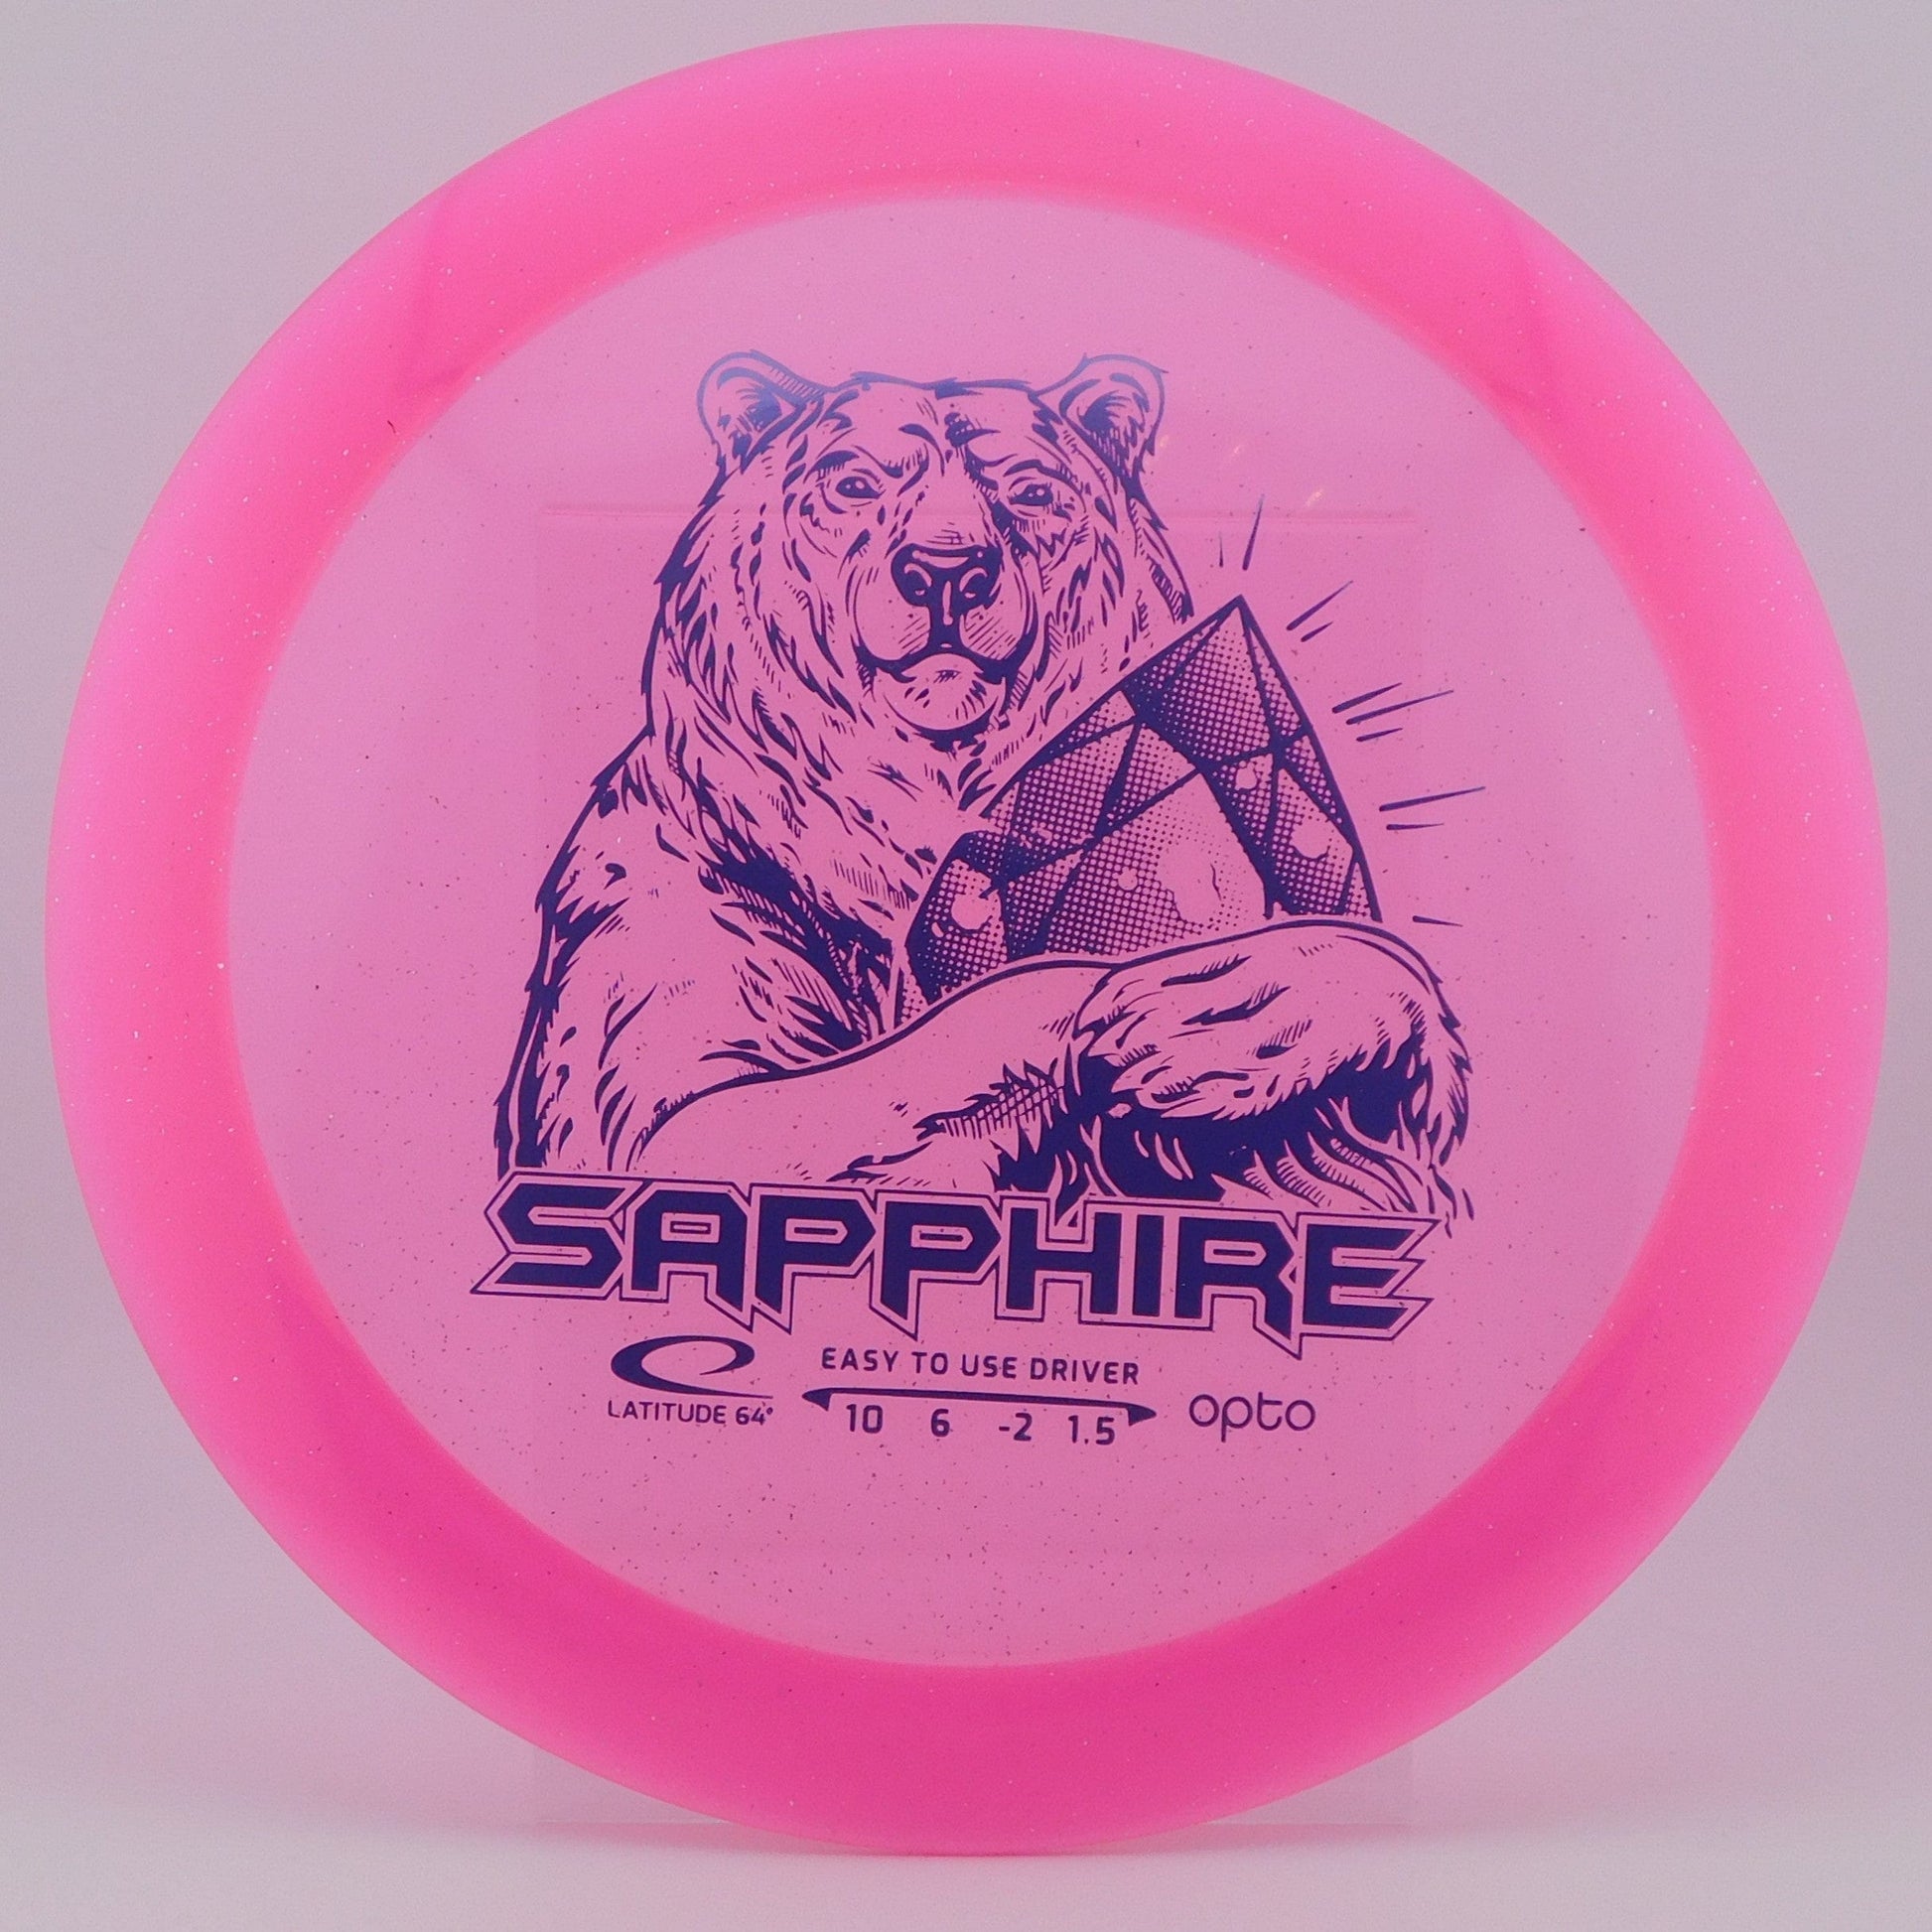 Latitude 64 Sapphire - Opto 10│6│-2│1.5 163.7g - Pink - Latitude 64° Sapphire - Opto Line - 100059